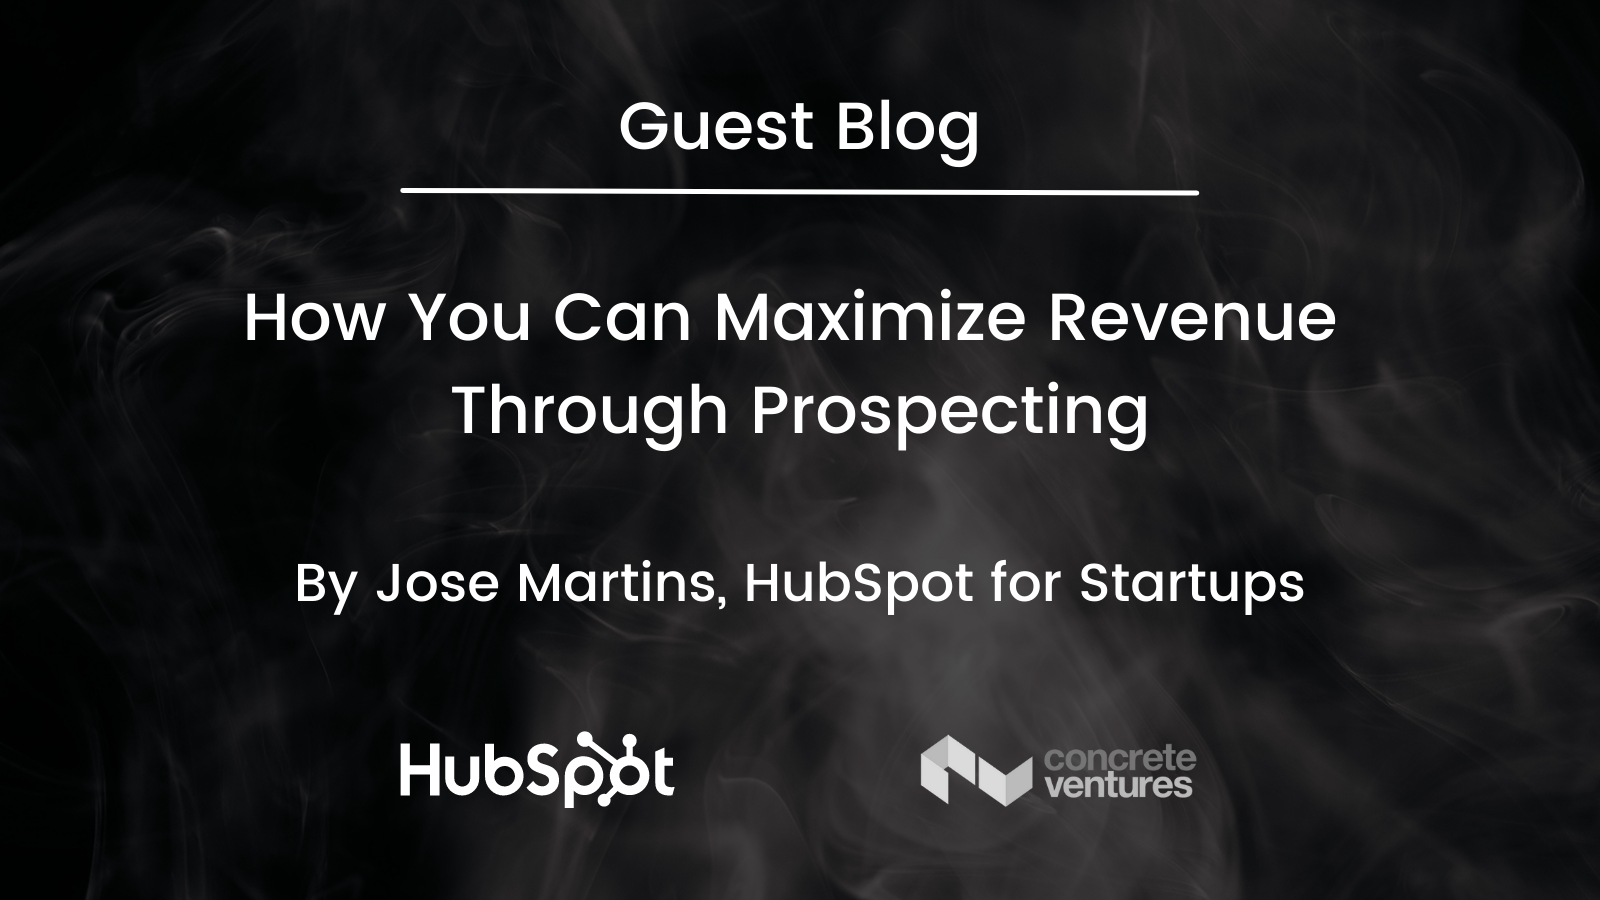 How to maximize revenue through prospecting